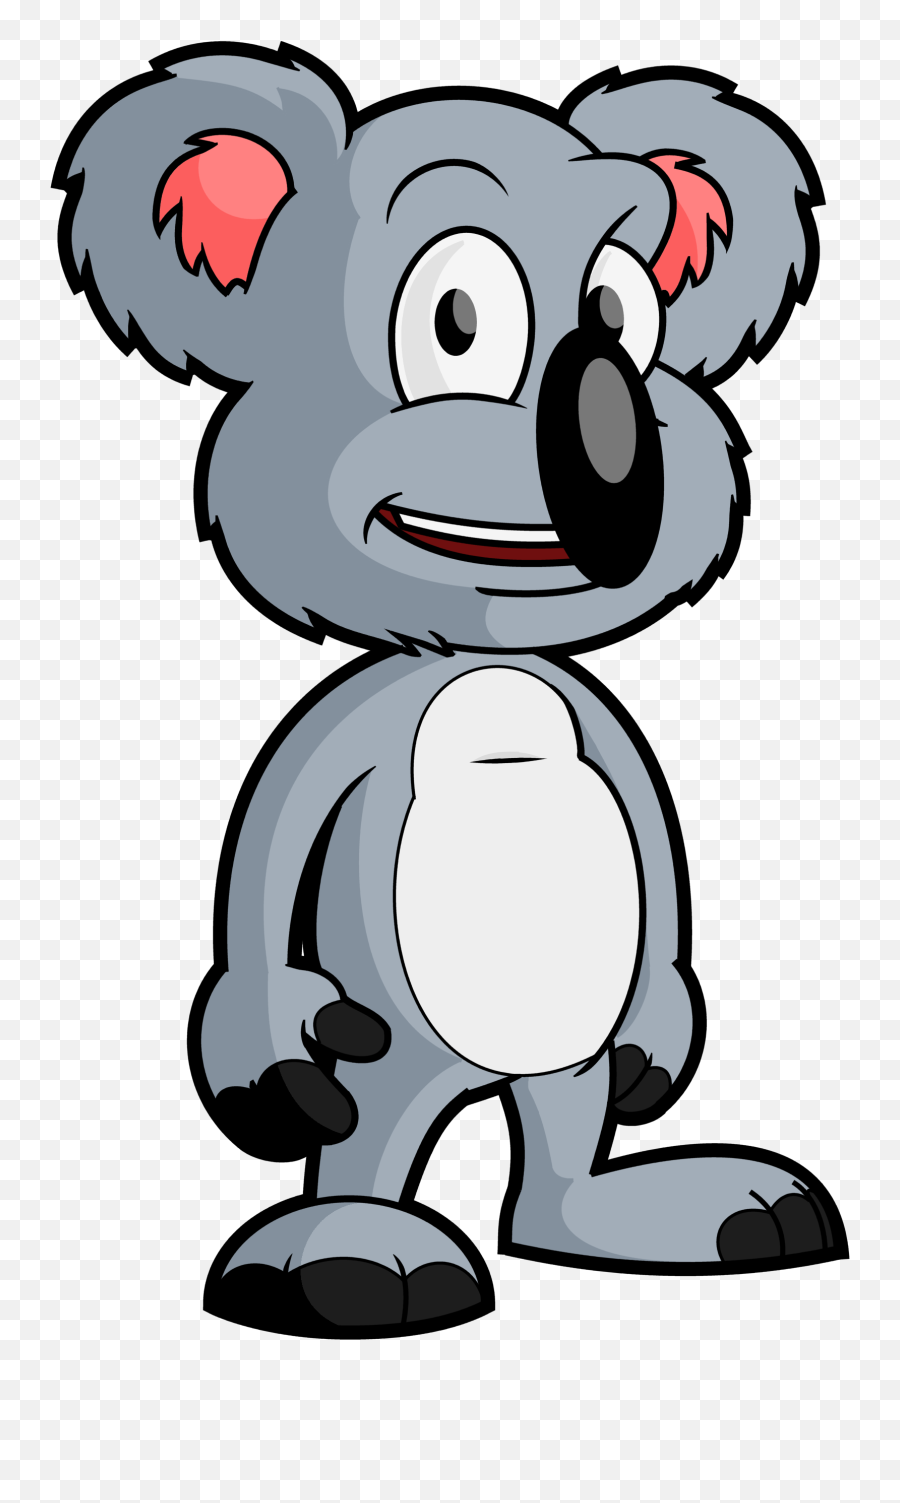 The Best Free Koala Vector Images - Koala Cartoons Emoji,Koala Emoticon